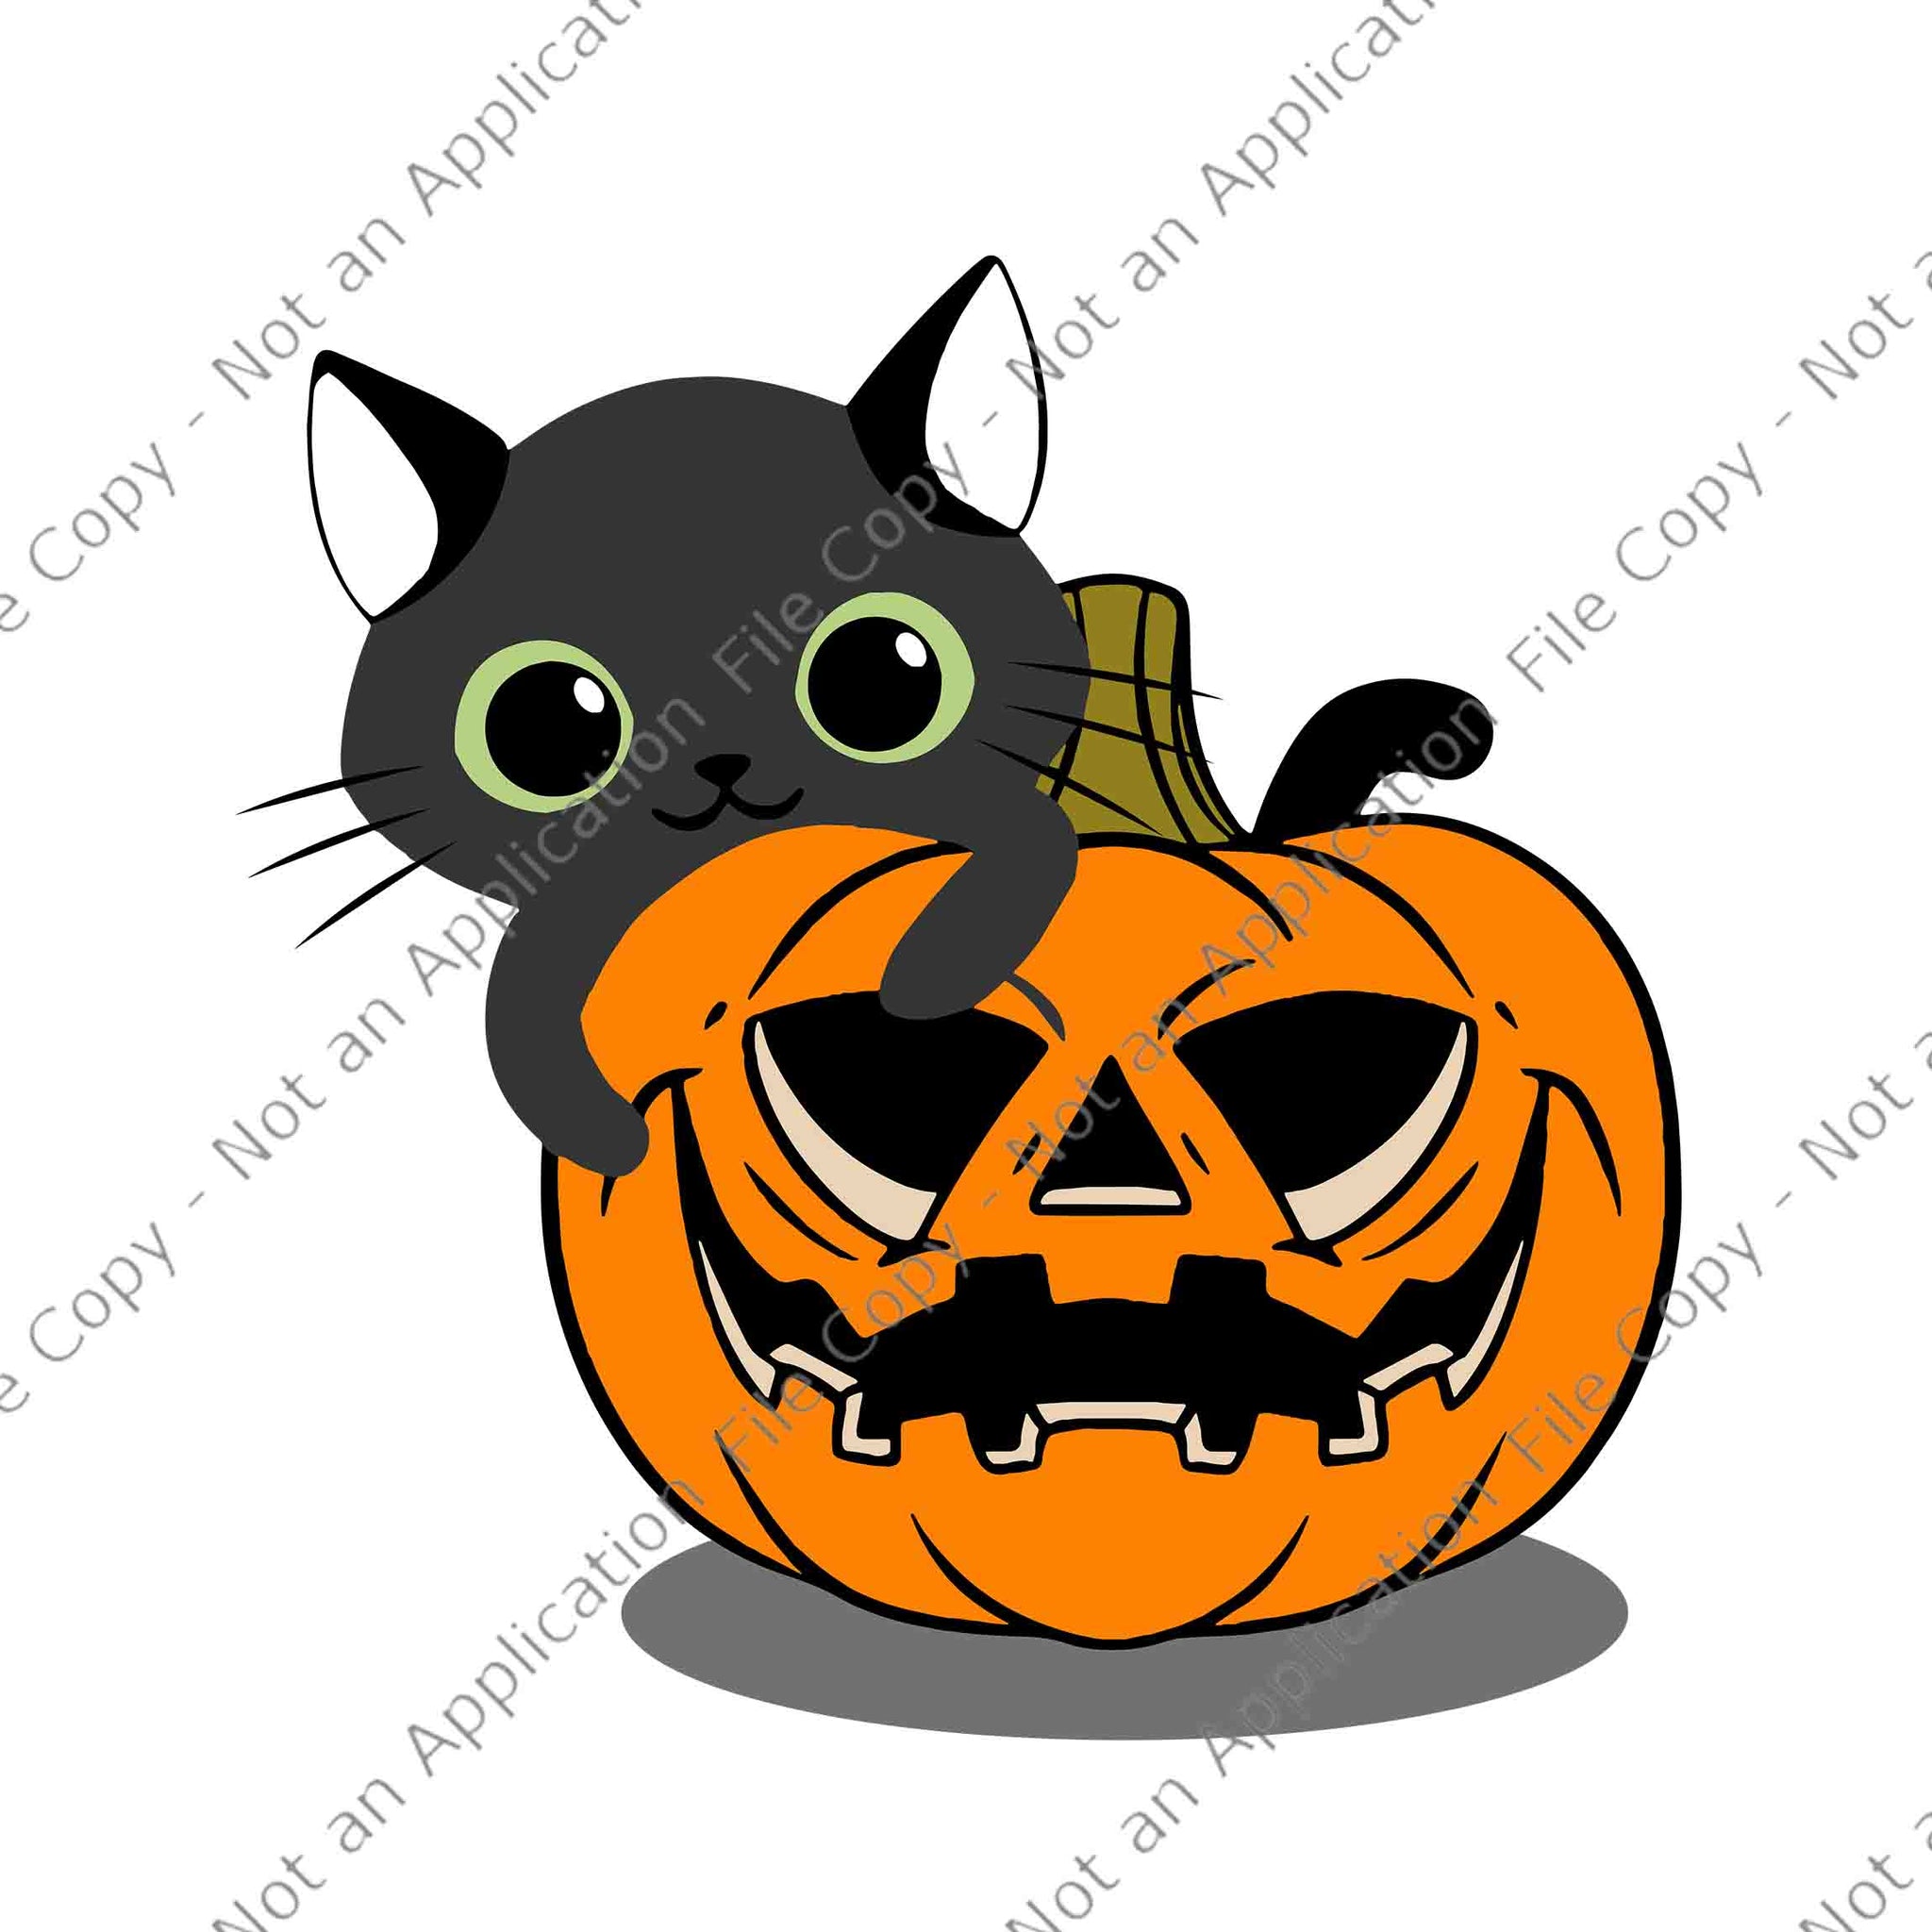 Halloween Black Cat Witch On Pumpkin Svg, Black Cat Witch Svg, Black Cat Halloween Svg, Halloween Svg